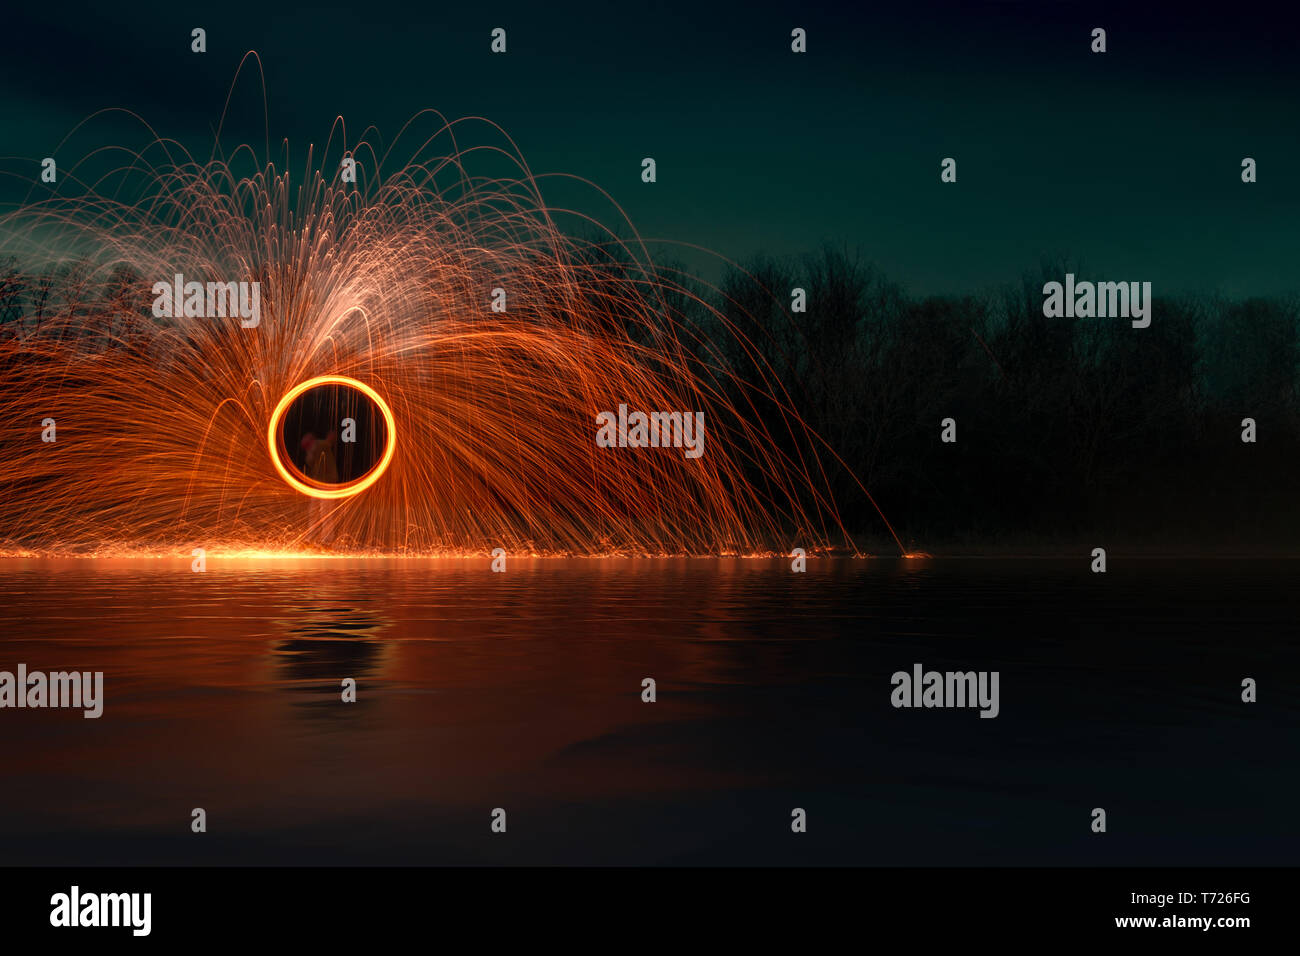 steel wool firework at night at the lake Stock Photo